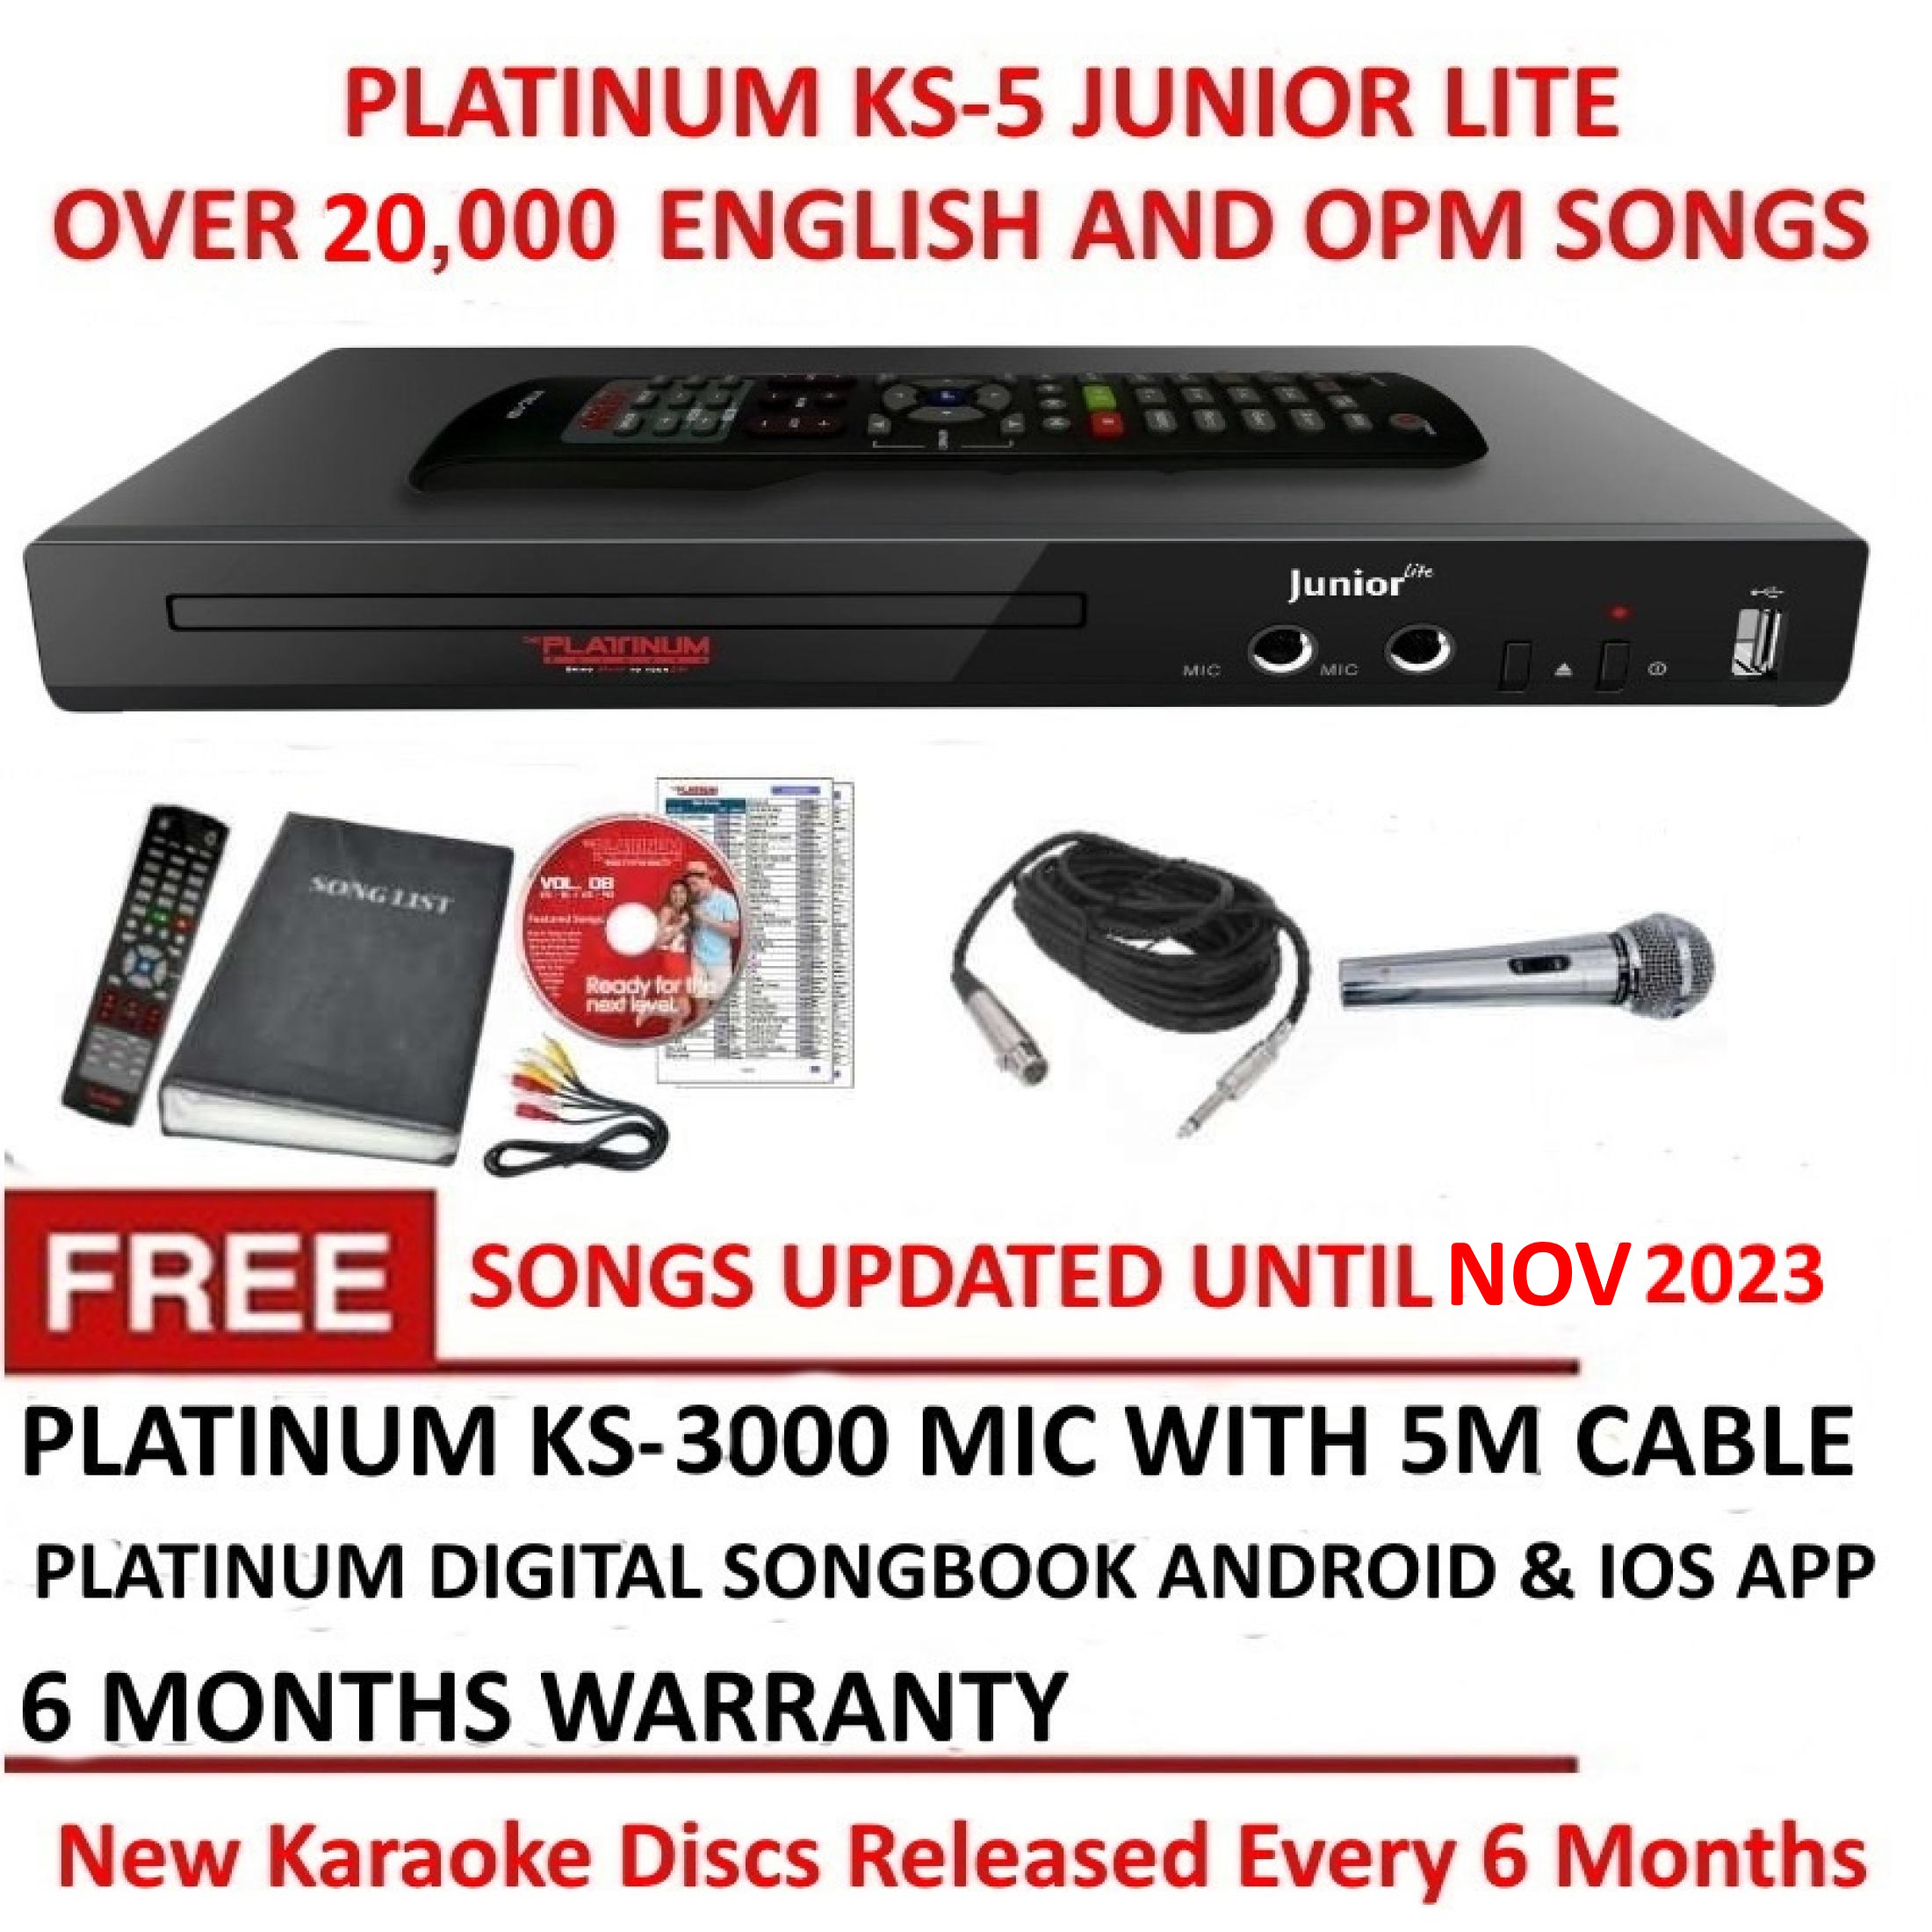 UNBOXING : The Platinum K-BOX 2 KS-40+ Videoke DVD Karaoke Player